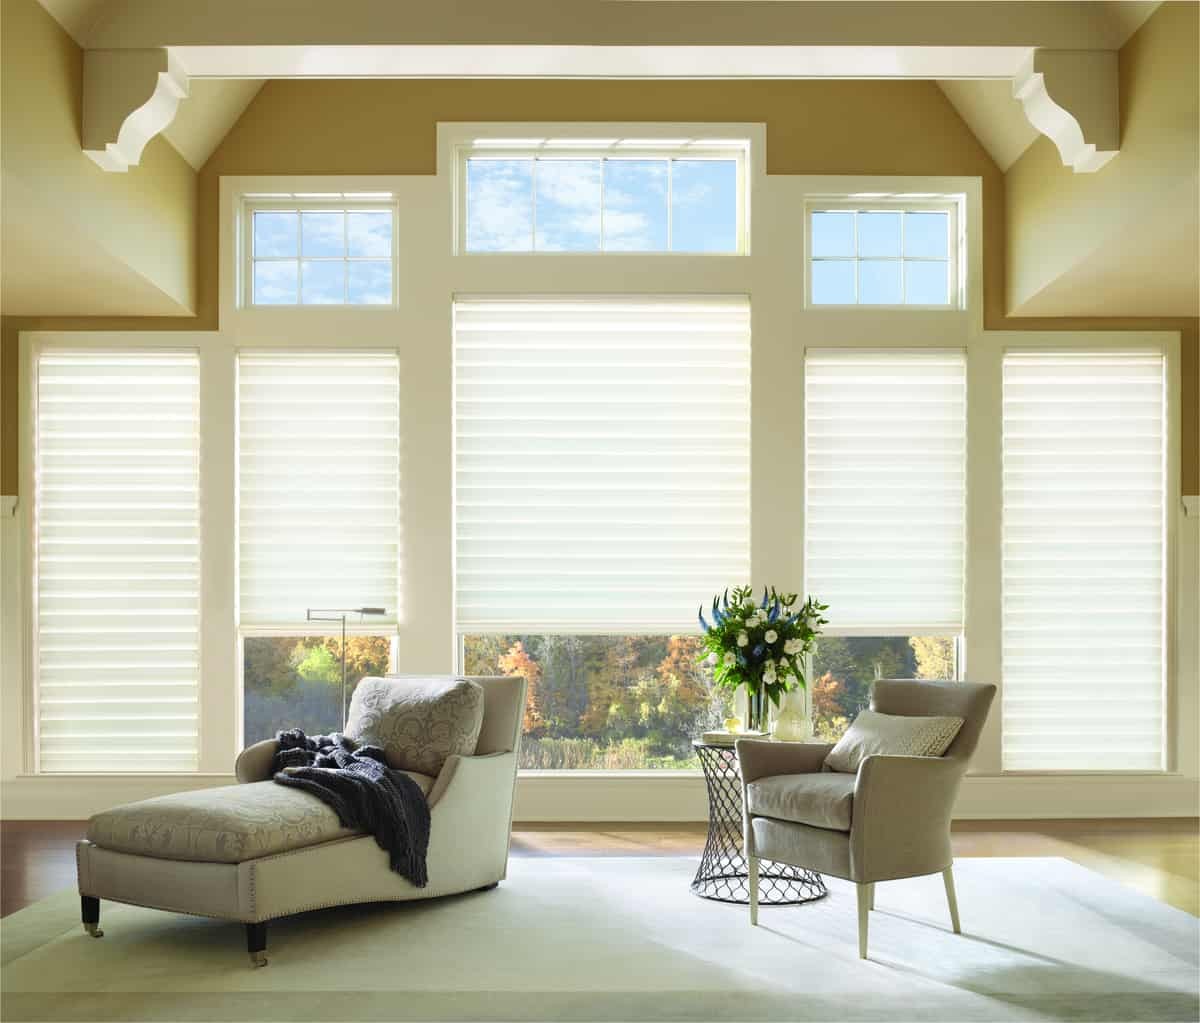 Hunter Douglas Solera® Shades near Mount Pleasant, South Carolina (SC) window treatments, blinds, window coverings.